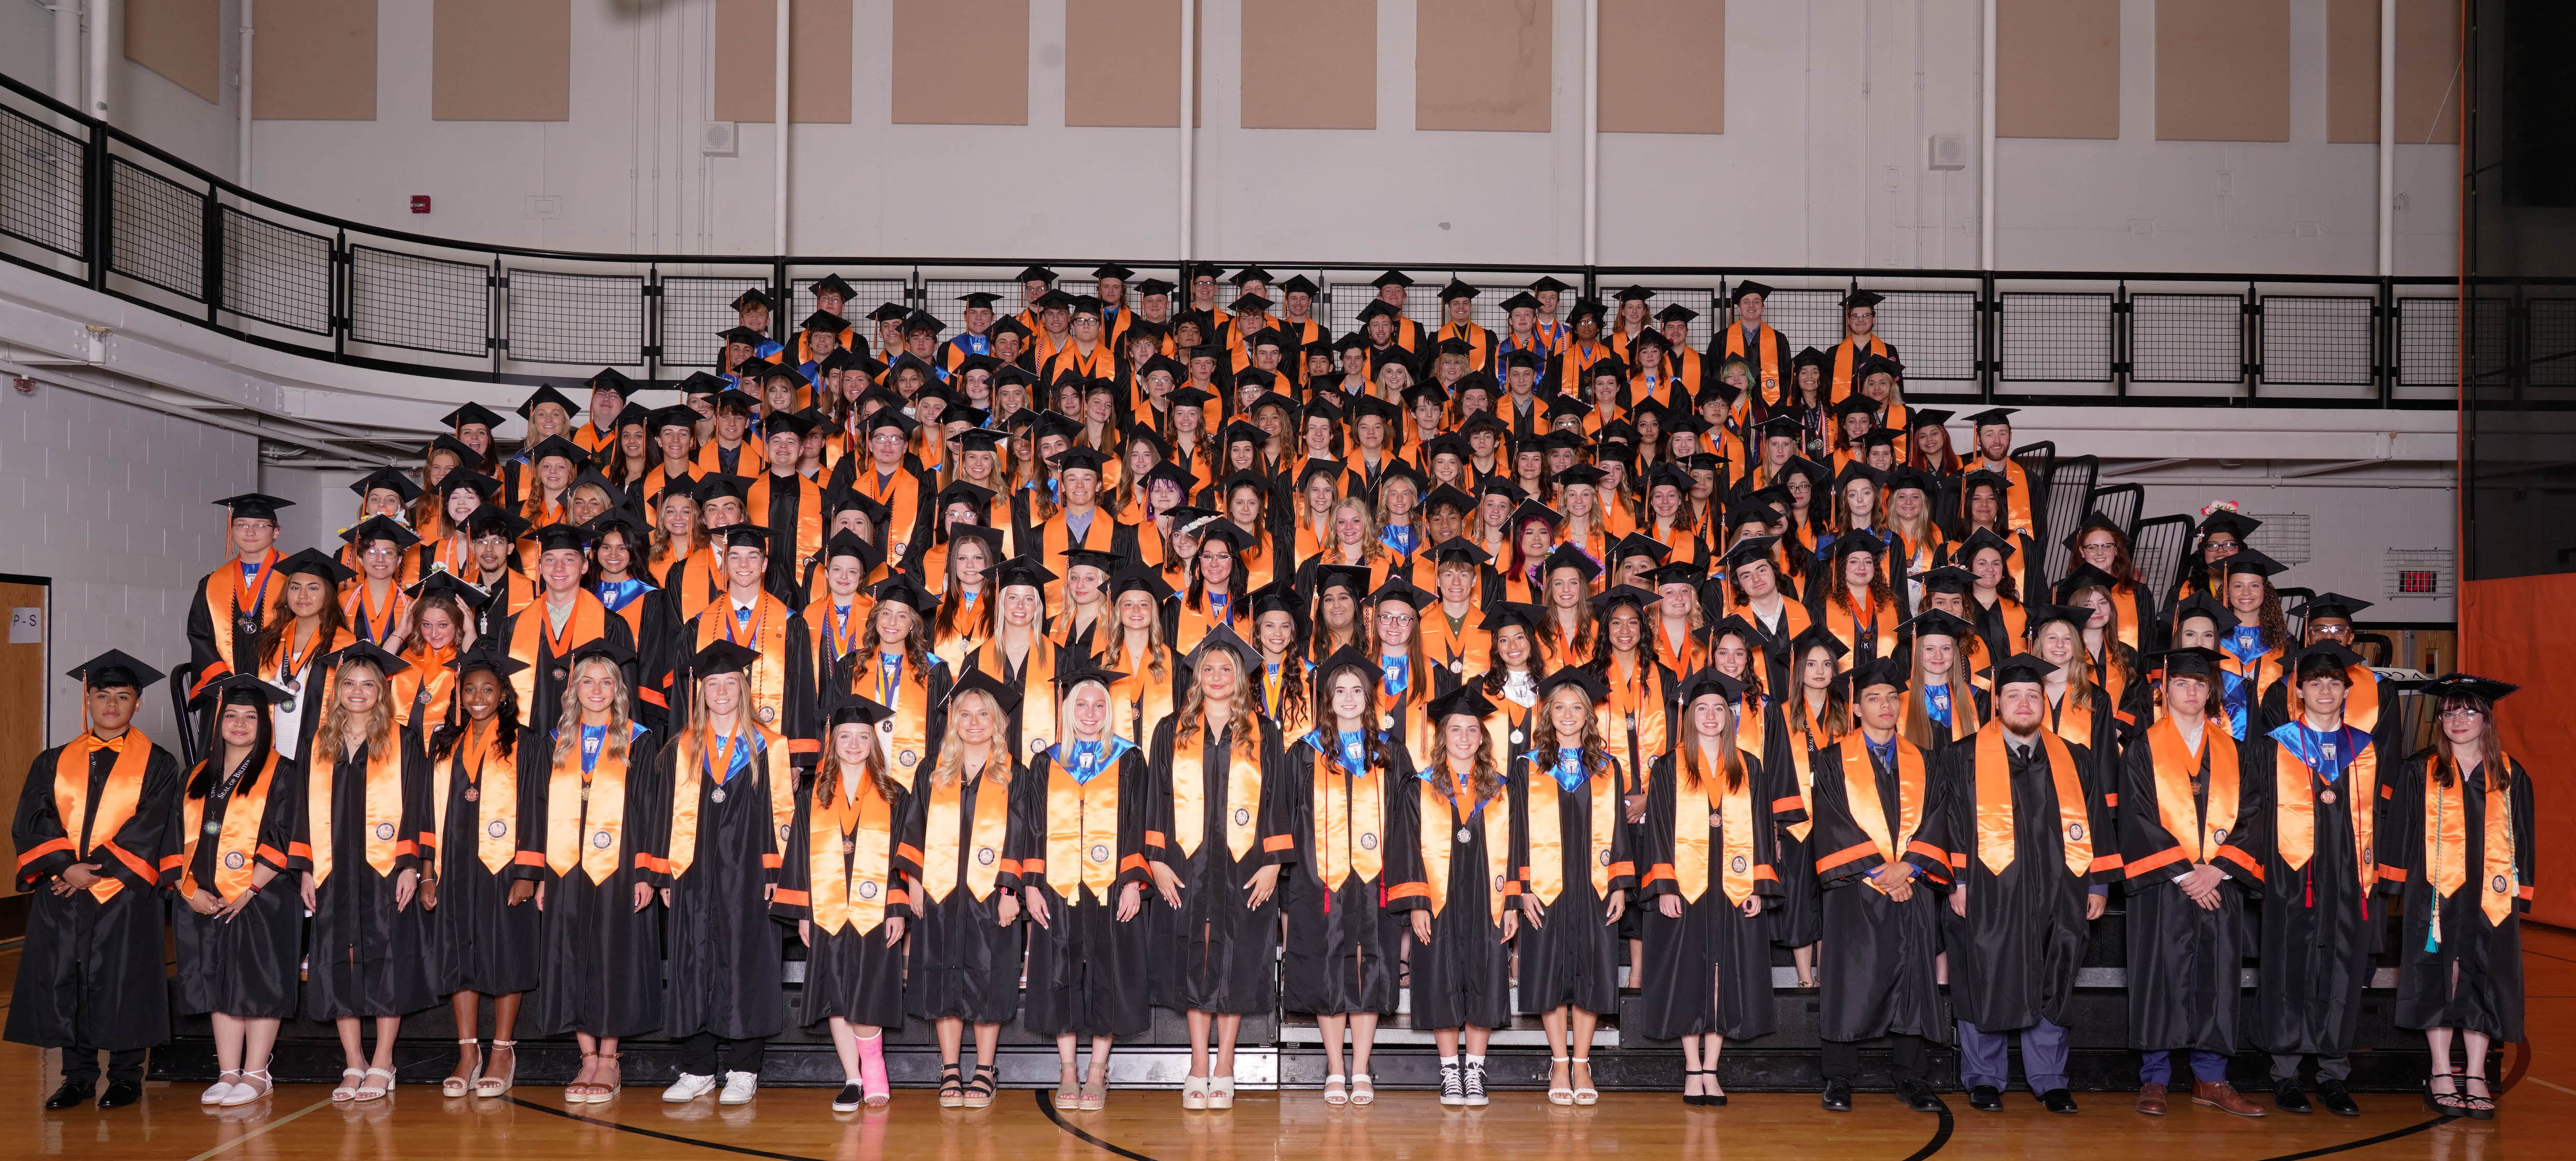 Distinguished Warrior Graduates in graduation caps and gowns with Distinguished Warrior orange stole